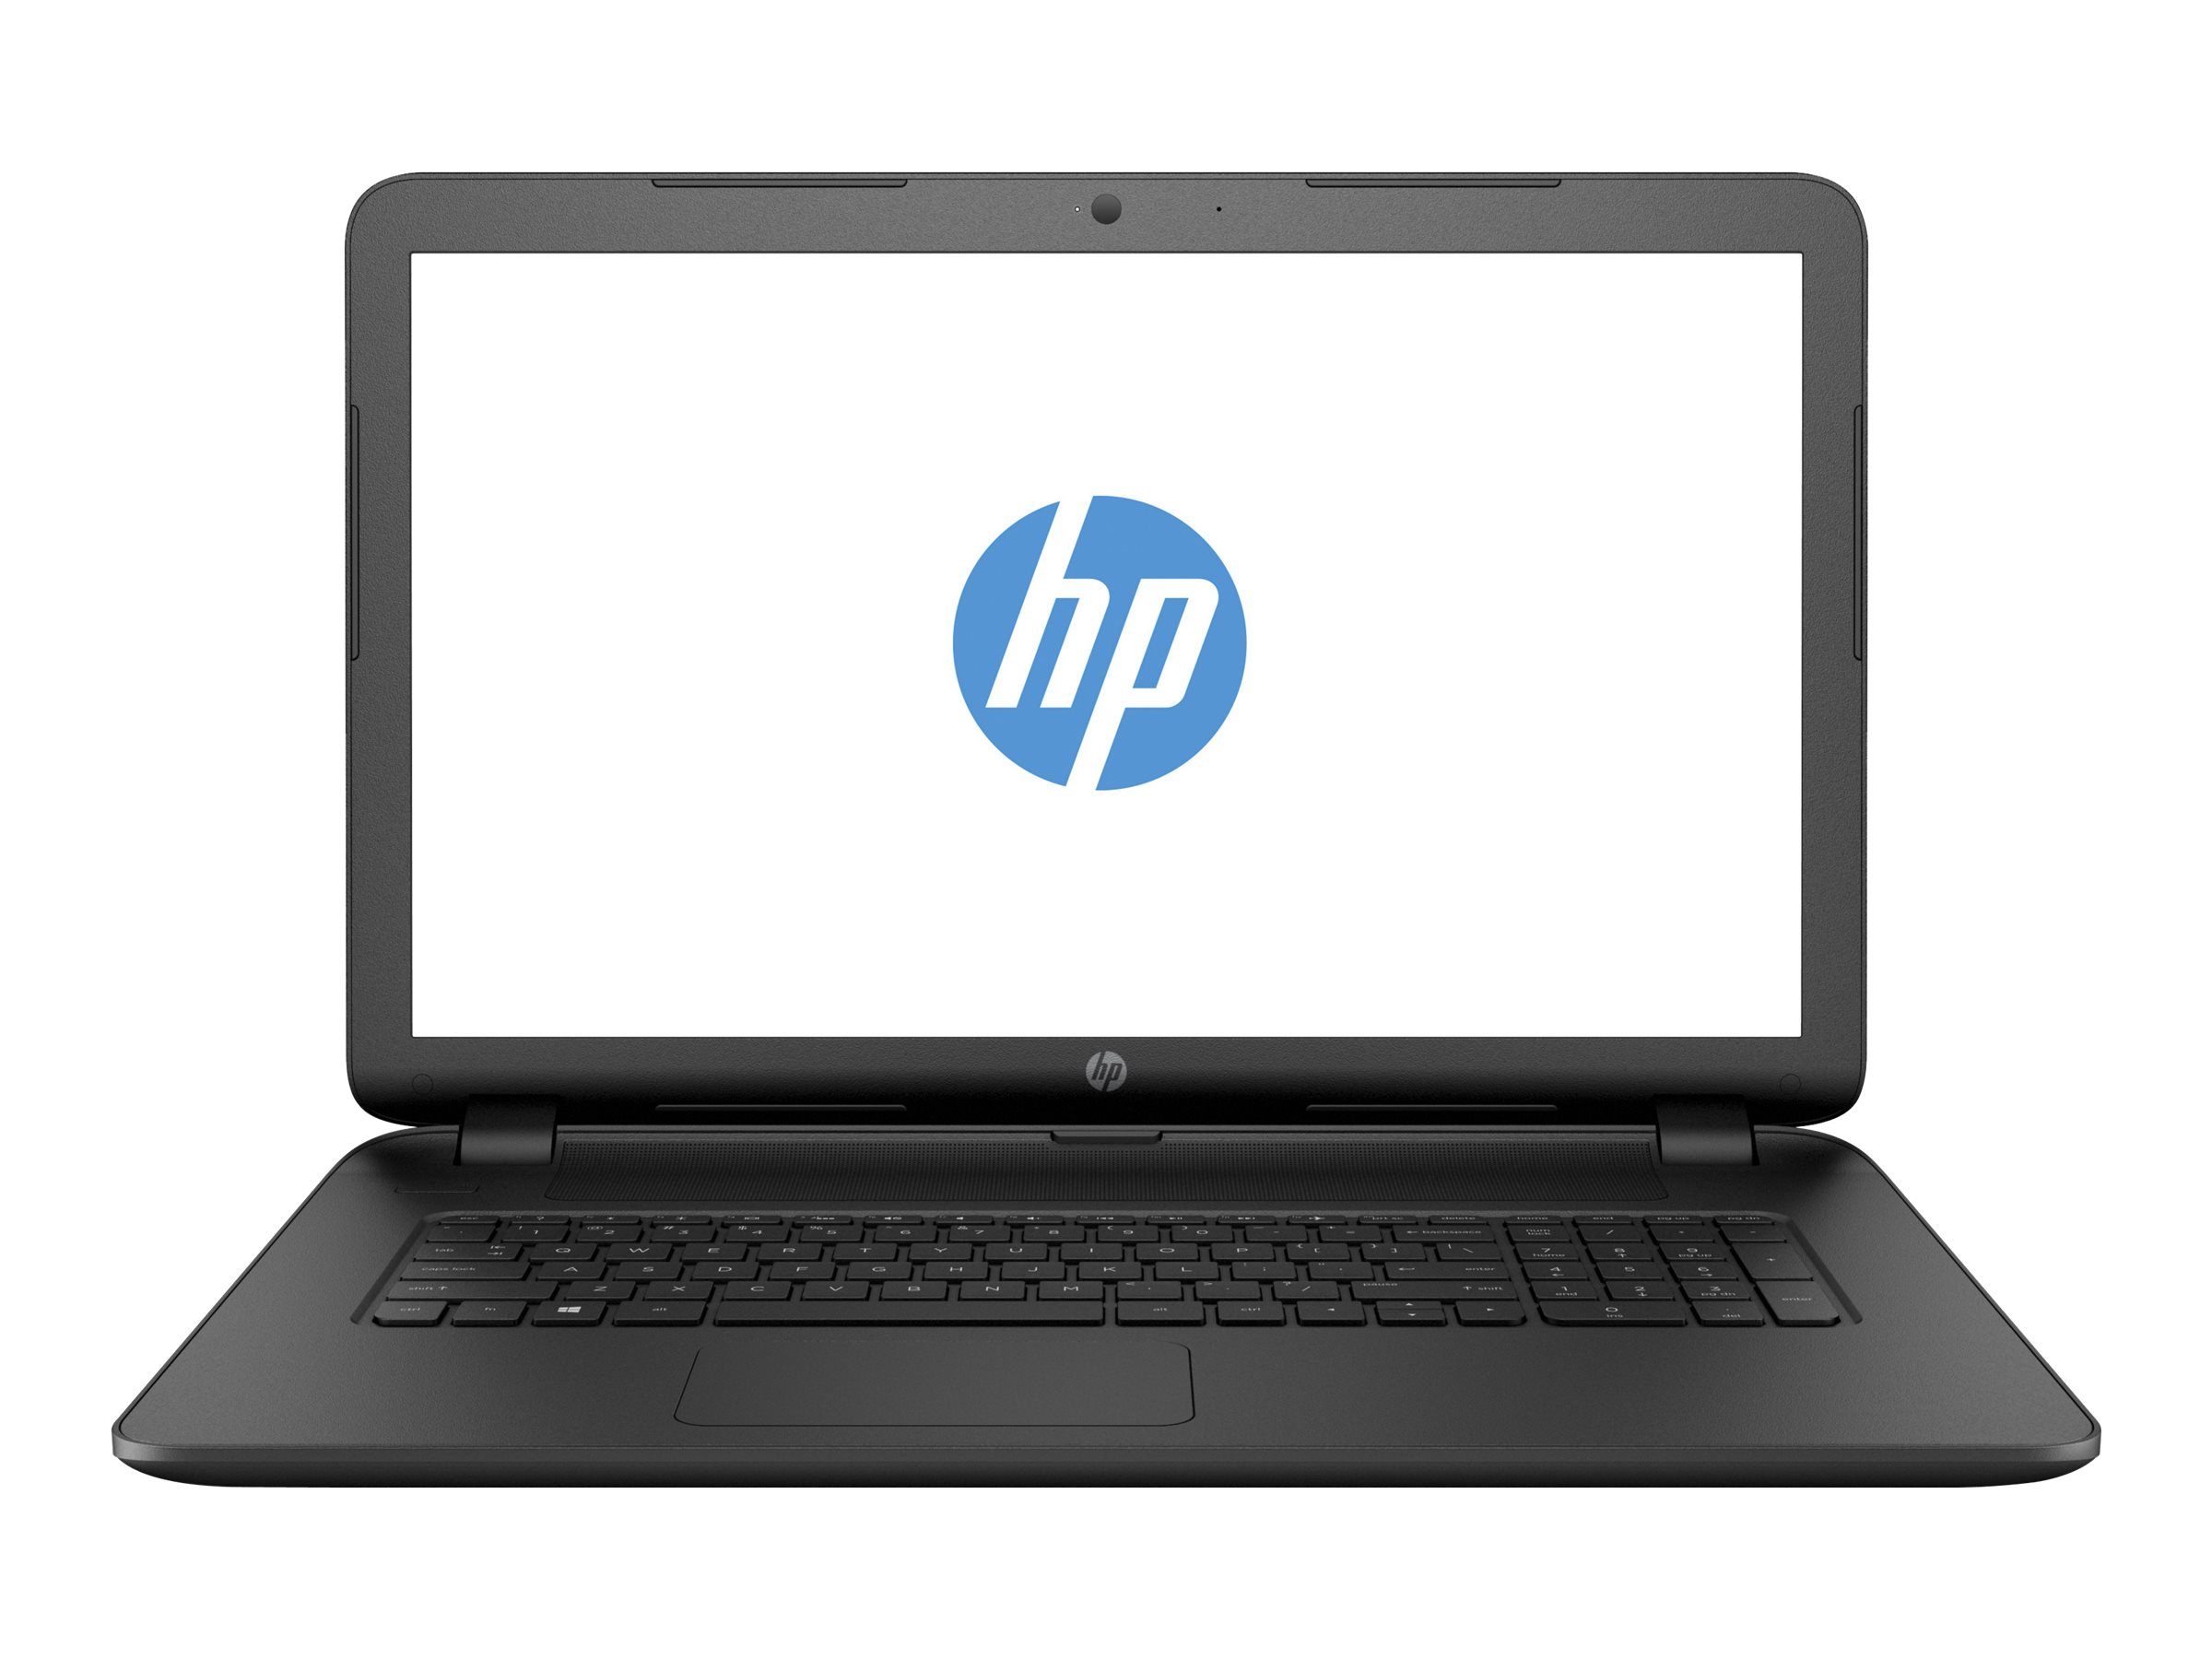 HP Laptop 17-p121wm - AMD A6 - 6310 / up to 2.4 GHz - Win 10 Home 64-bit - Radeon R4 - 4 GB RAM - 500 GB HDD - DVD SuperMulti - 17.3" 1600 x 900 (HD+) - HP textured linear pattern in black - kbd: US - image 2 of 5